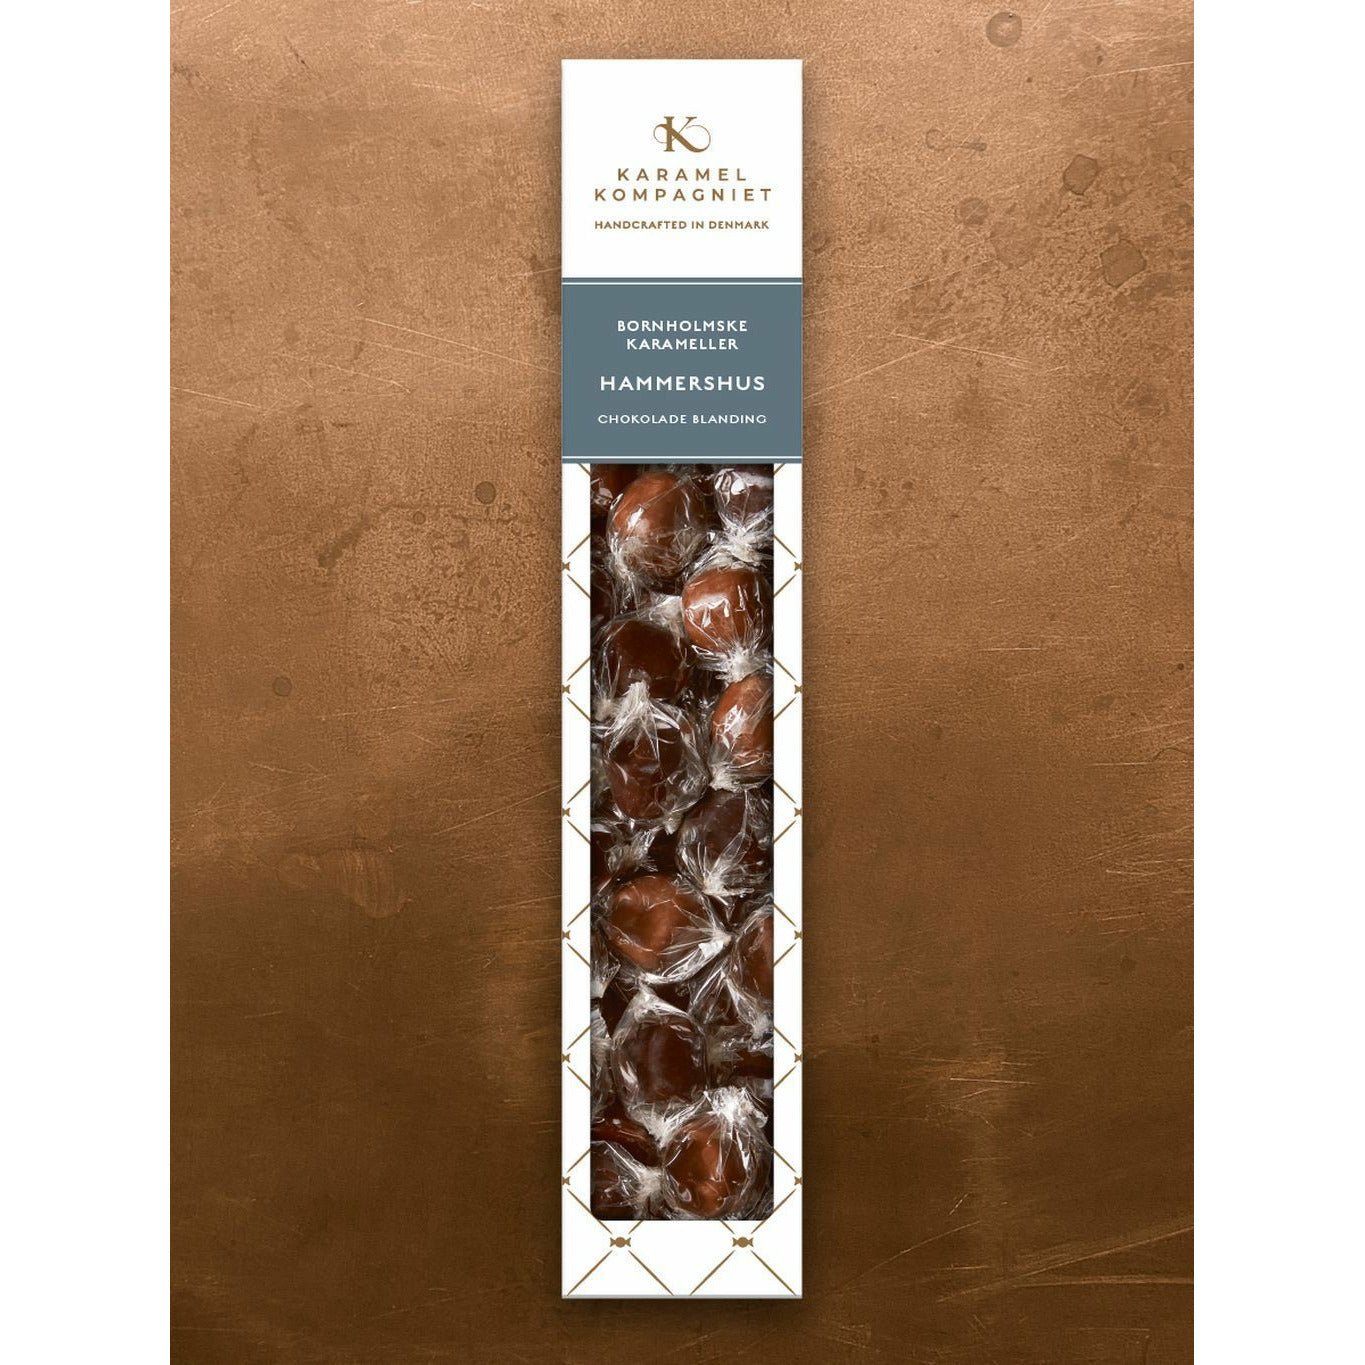 Karamel Kompagniet Karamels, Hammershus Mix of Chocolates 170G